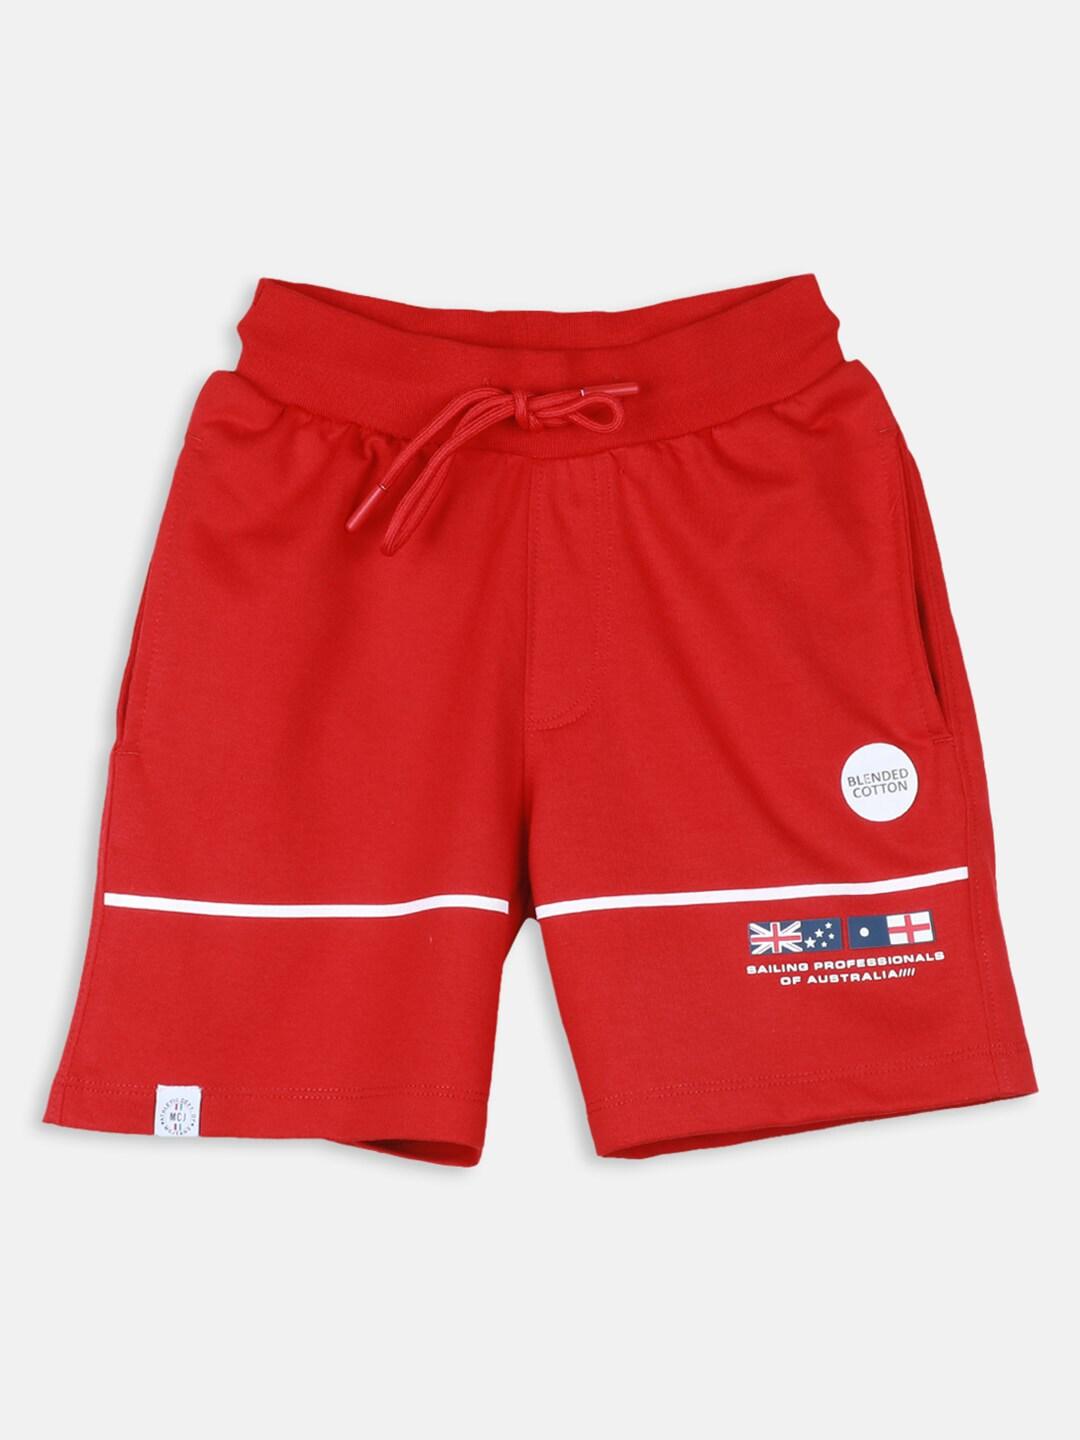 monte-carlo-boys-printed-sports-shorts